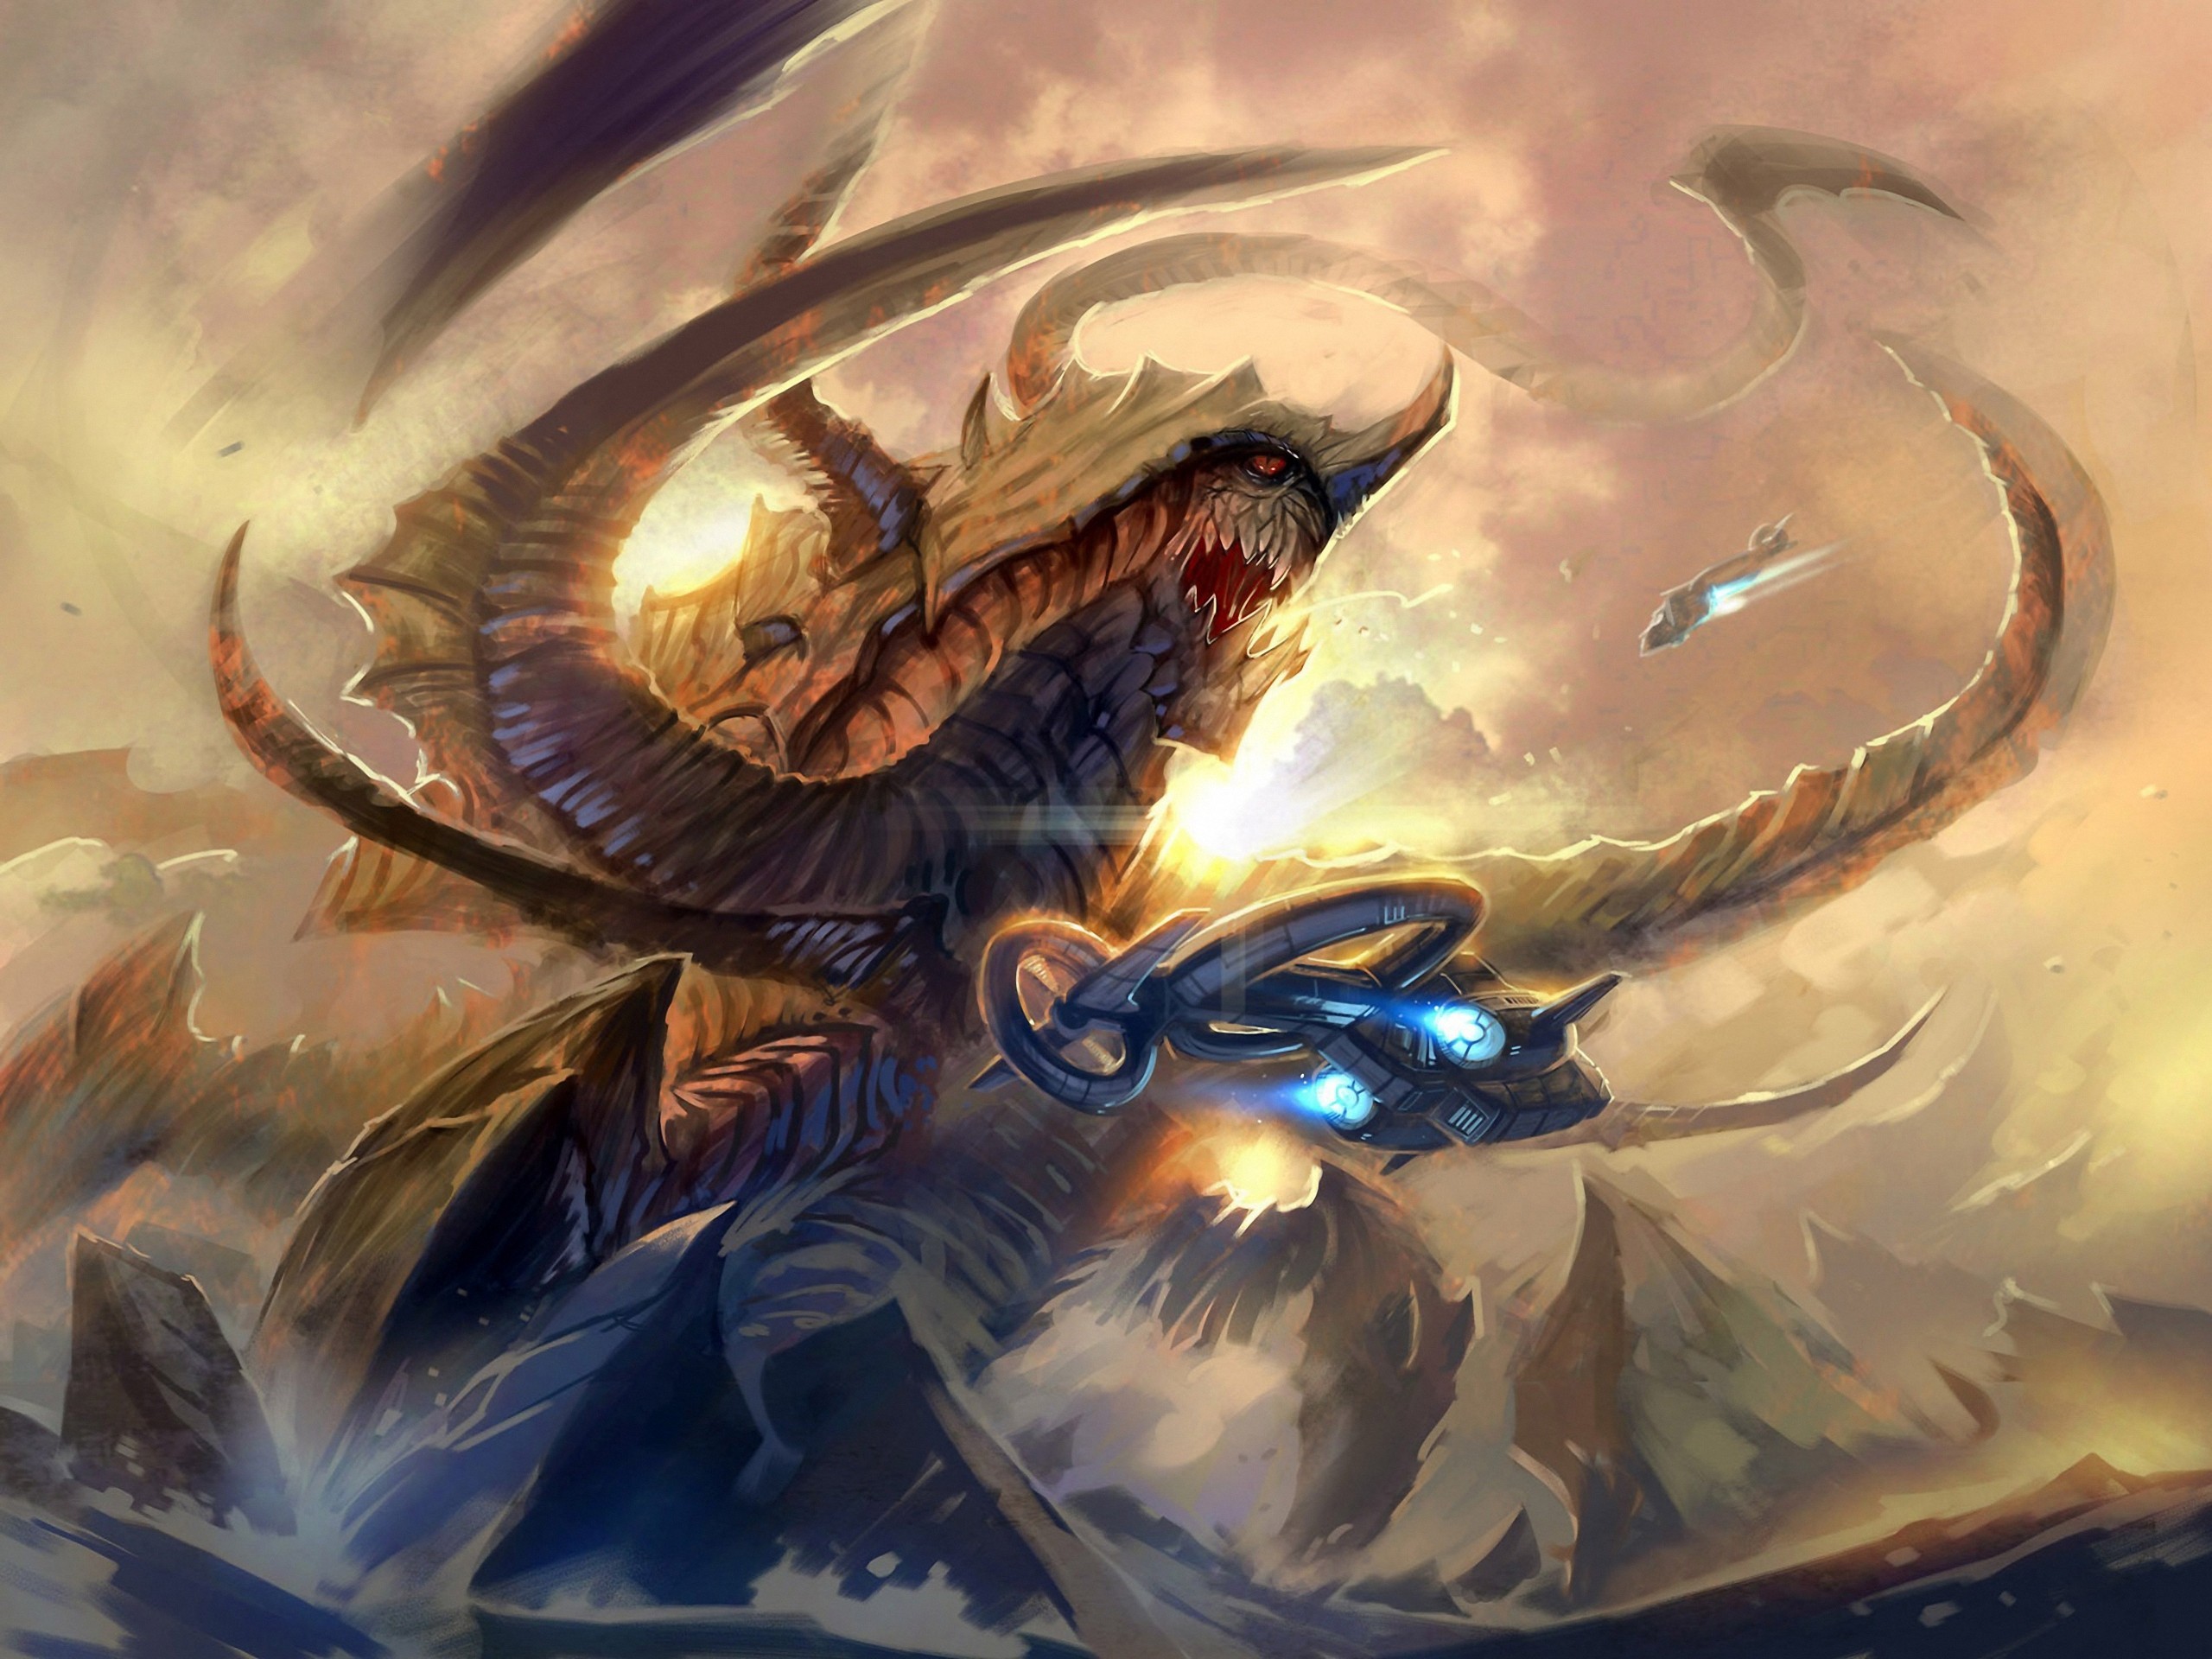 zerg wallpaper,dragon,cg artwork,fictional character,mythology,mythical creature